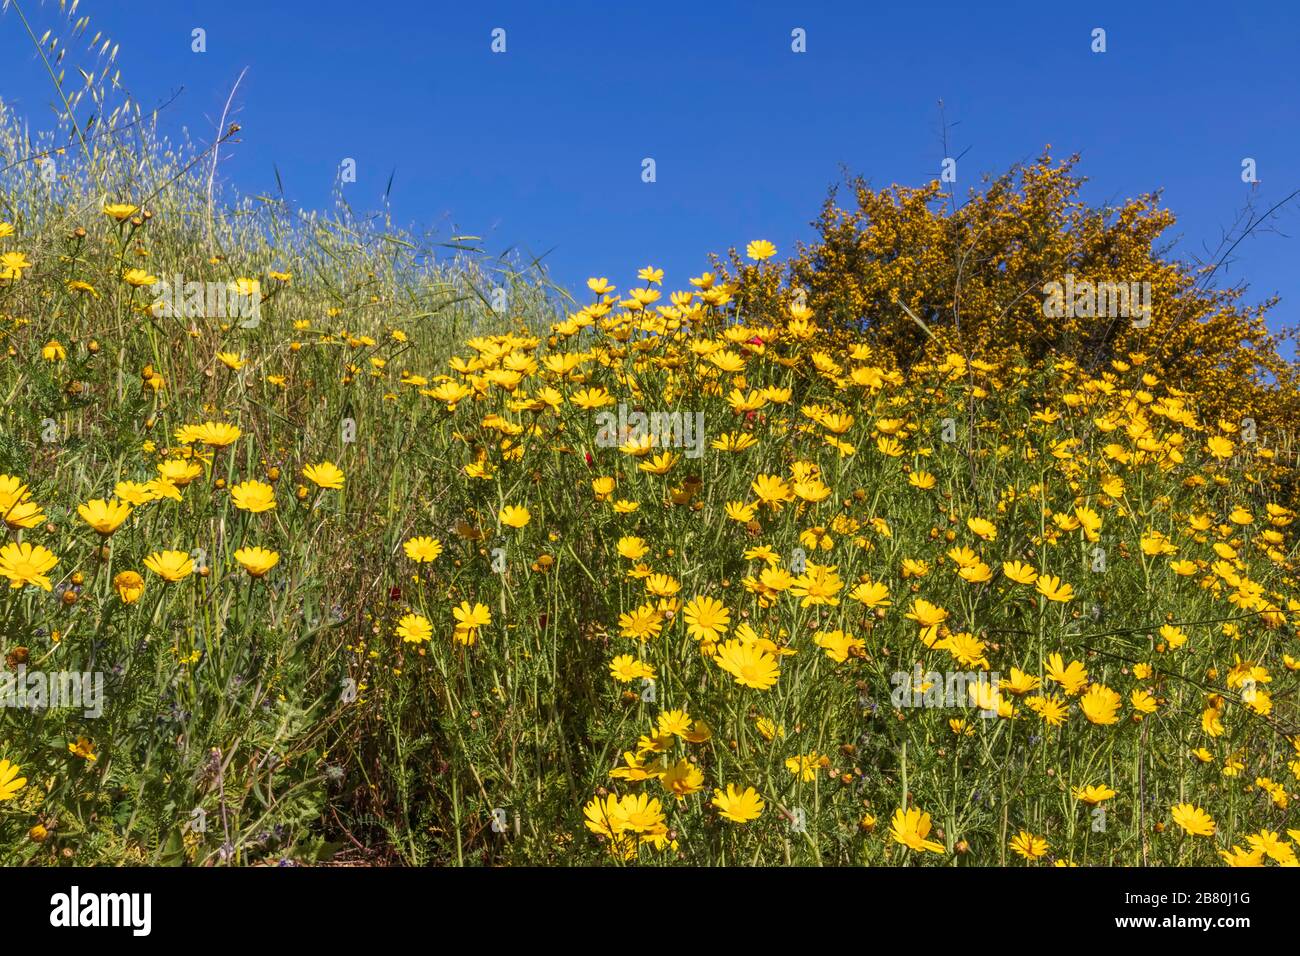 Meadow with blooming yellow Crown daisy Chrysanthemum coronarium flowers against blue sky Stock Photo